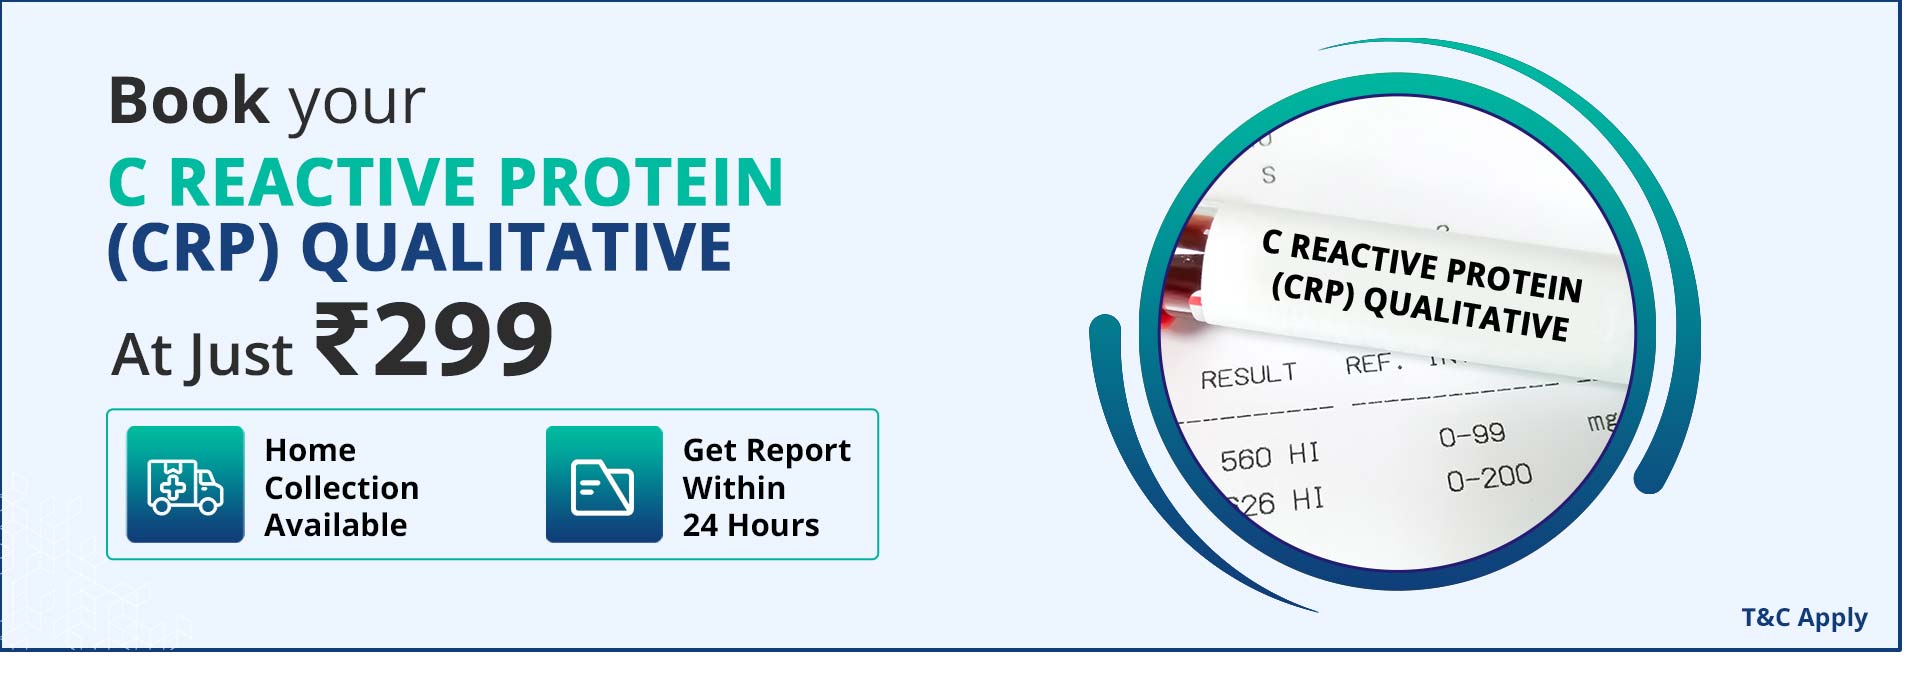 C Reactive Protein (CRP) Qualitative